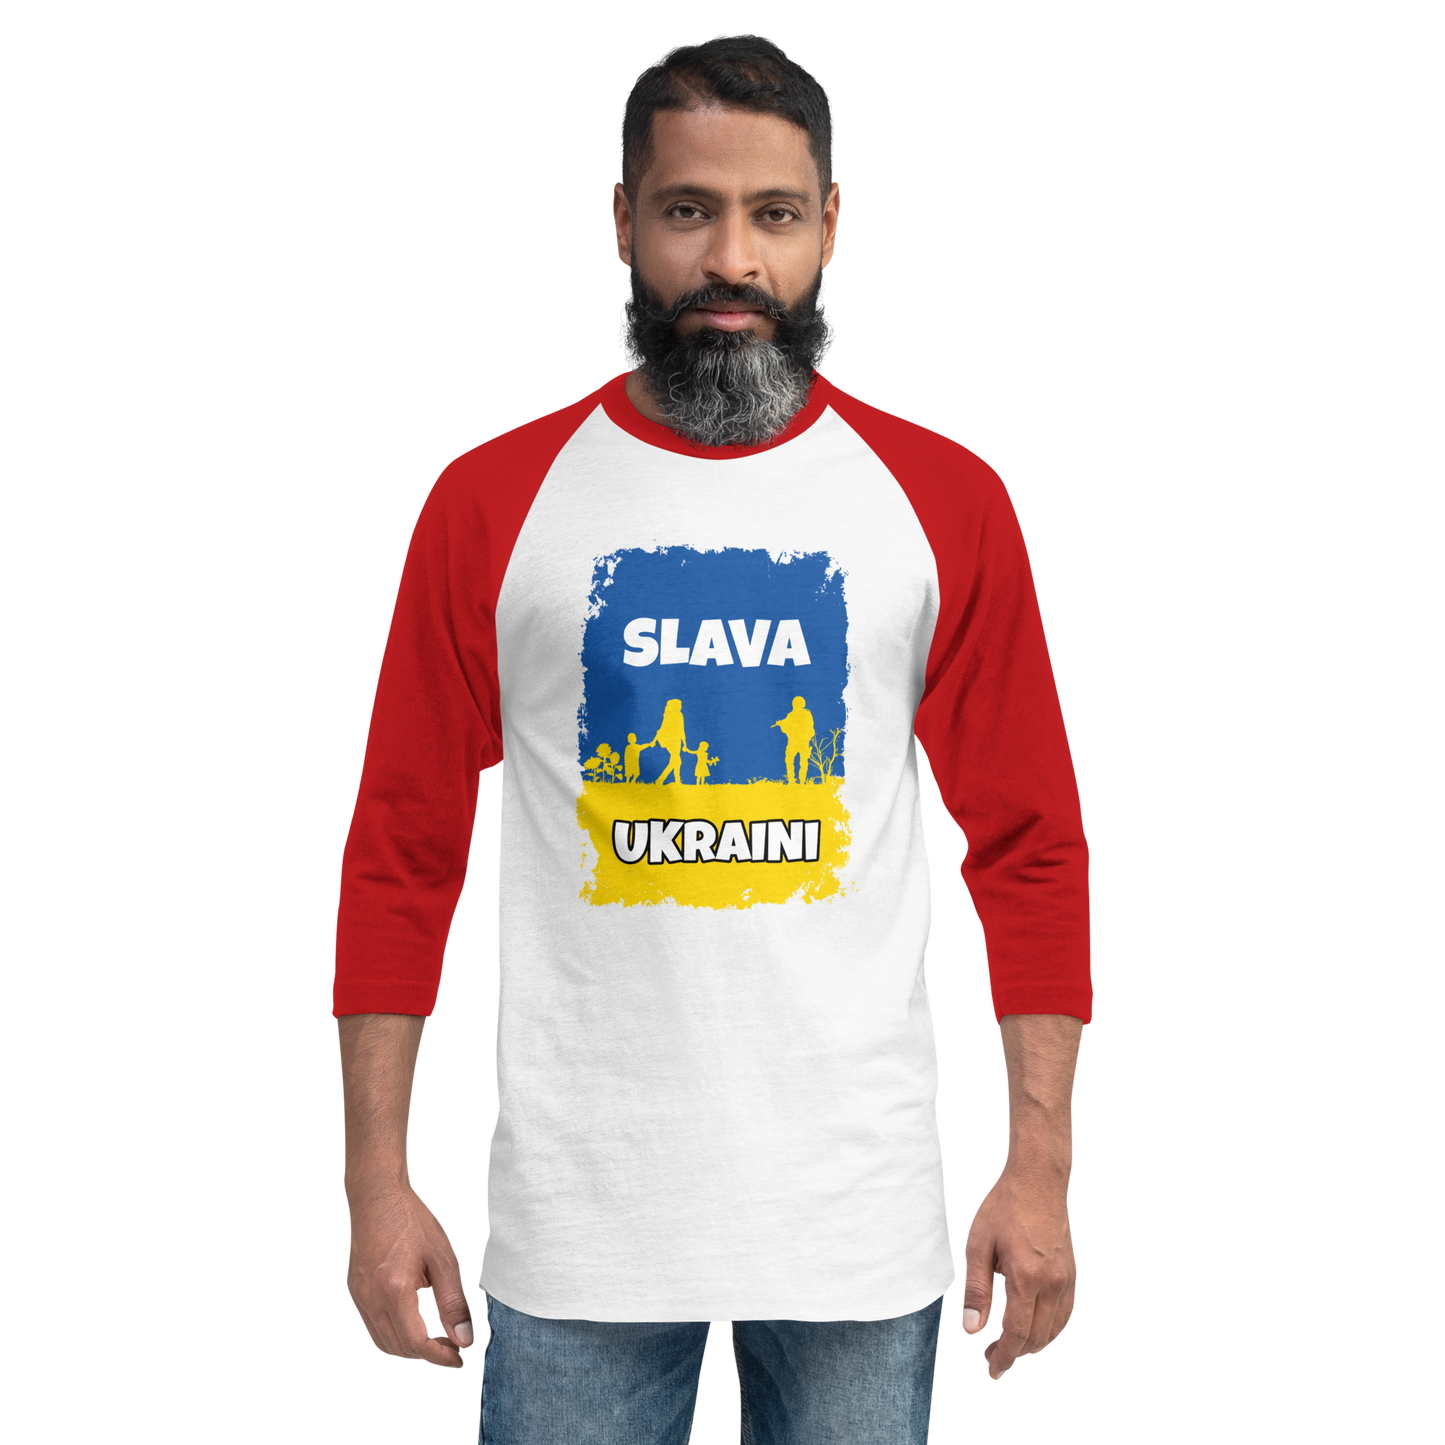 Slava Ukraini - 3/4 sleeve raglan shirt